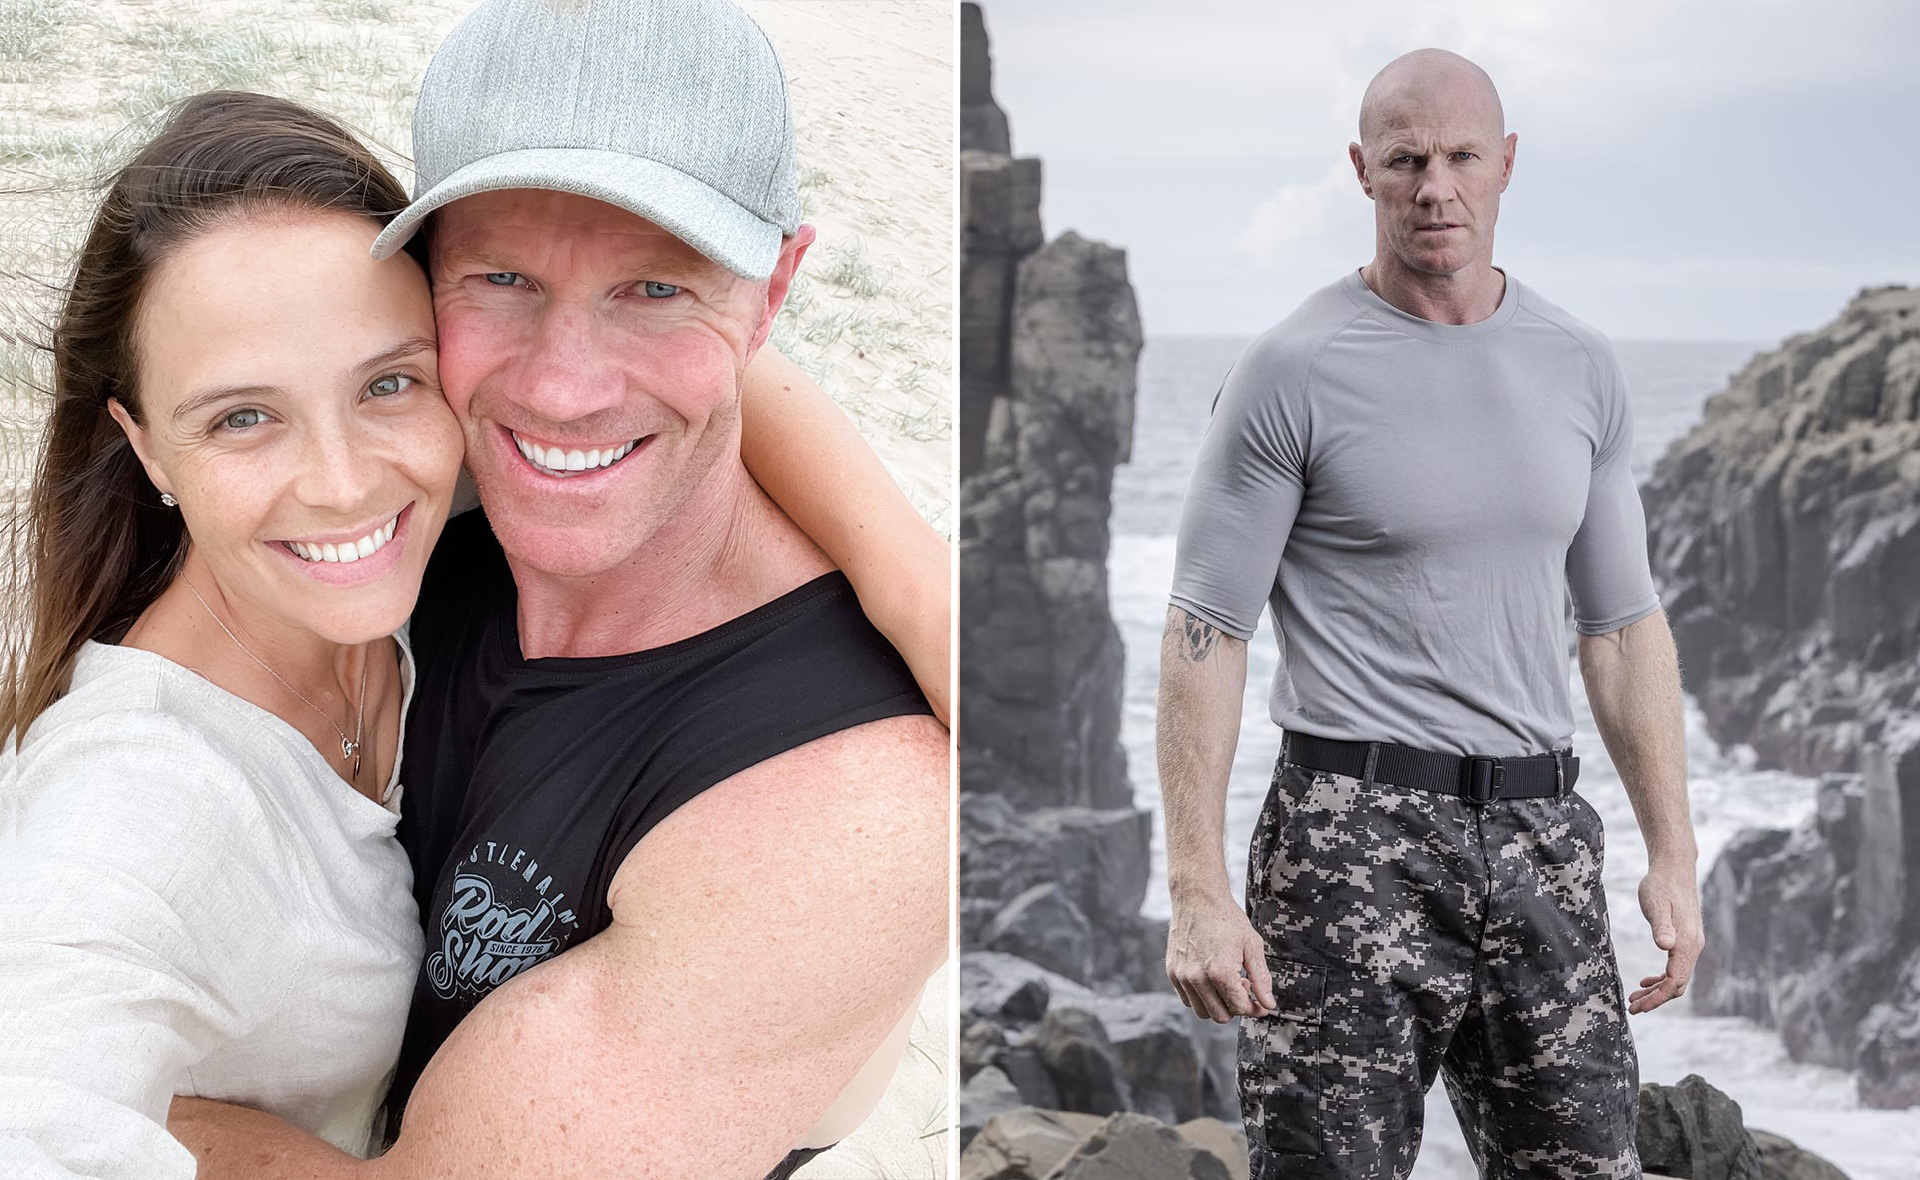 Lauren Brant praises her husband Barry Hall for showing his true self on SAS Australia